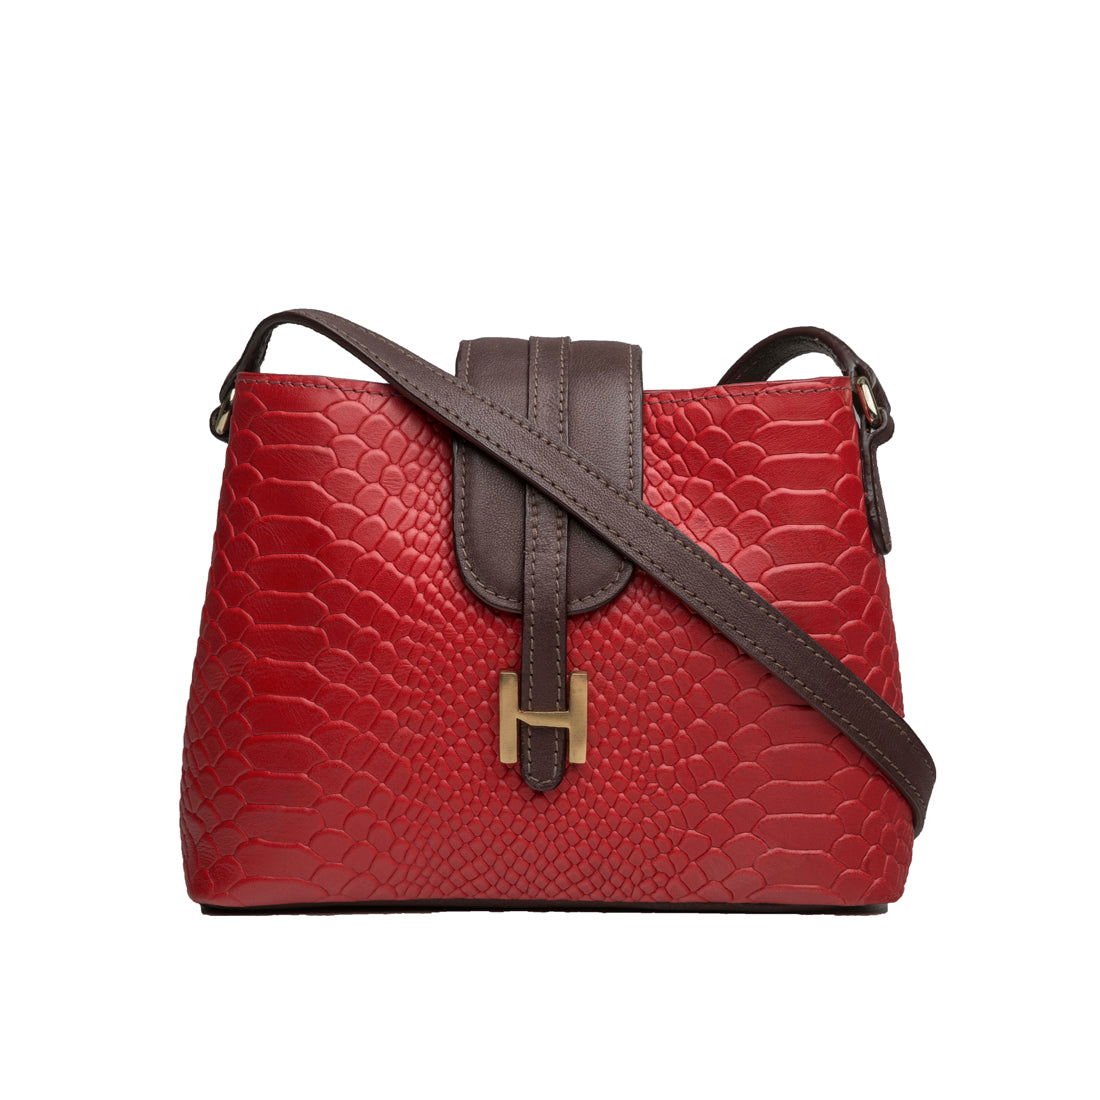 HIDESIGN Crossbody Bags & Handbags for Women for sale